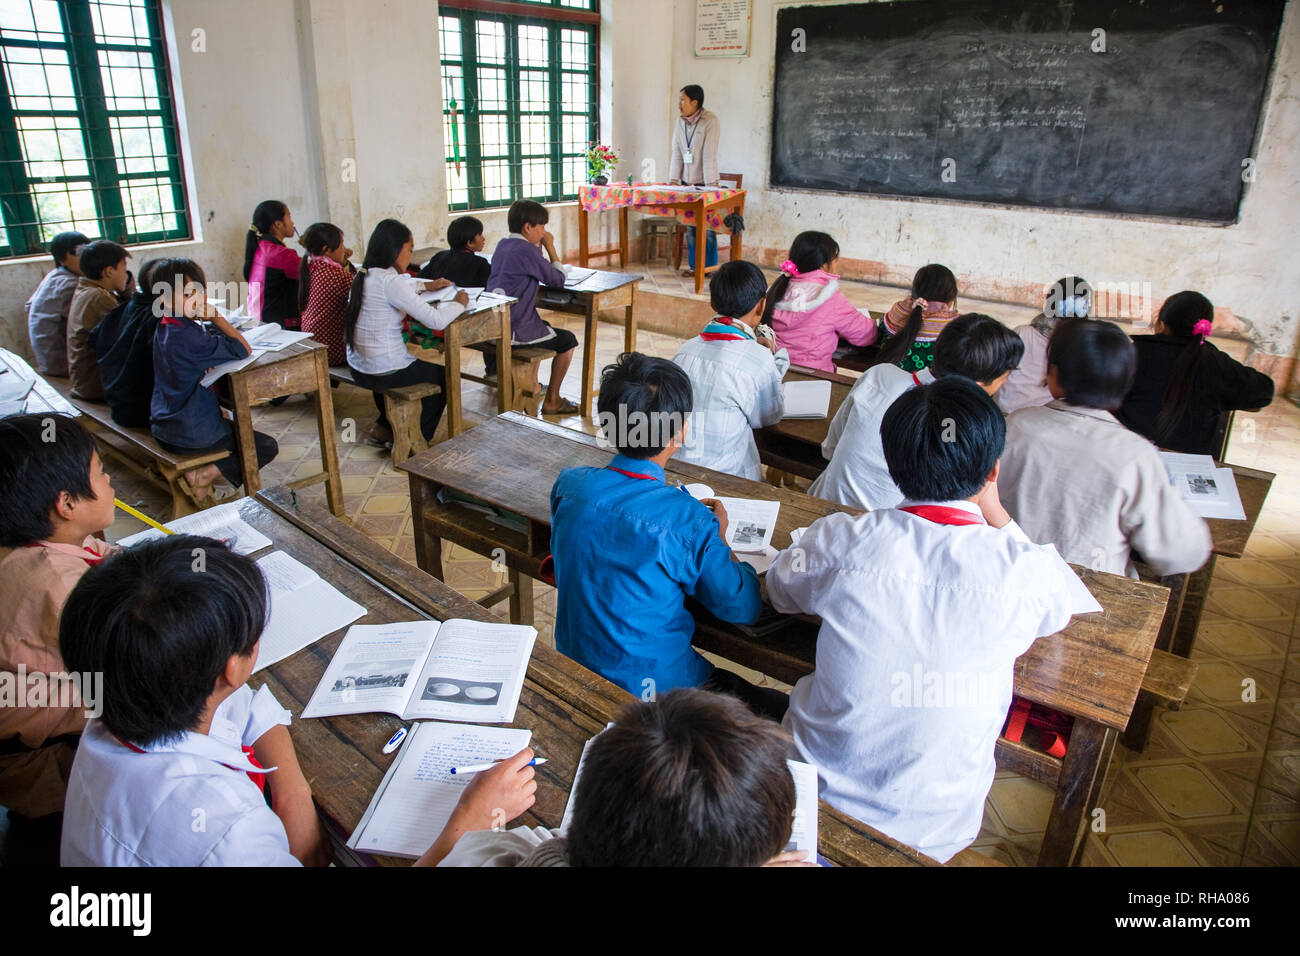 nr. Bac Ha, Vietnam; Thai Ha Pho village school. Stock Photo